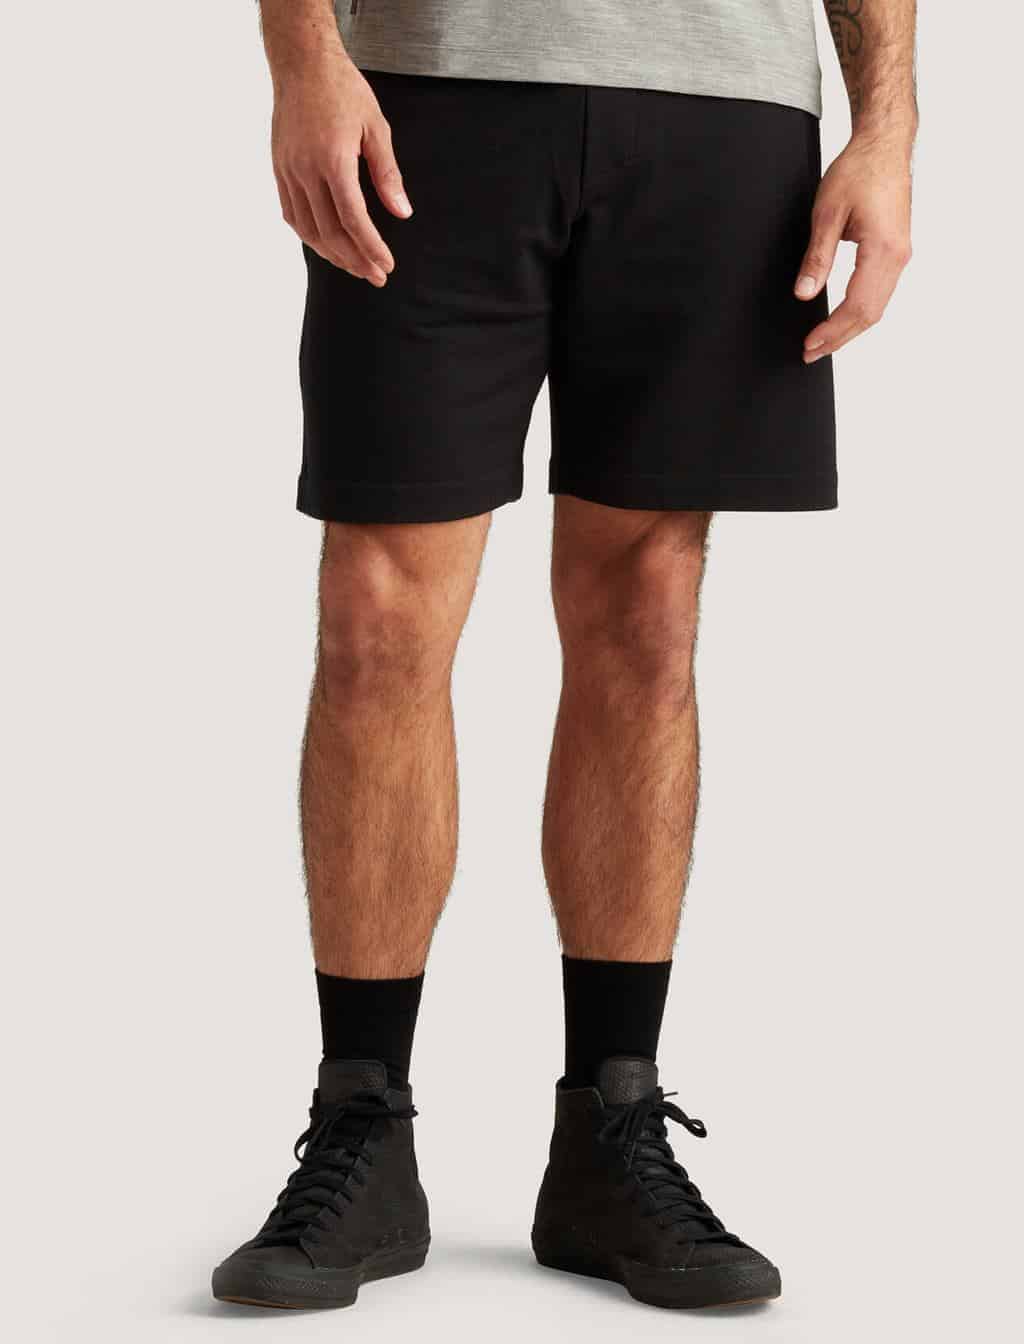 Men's Icebreaker City Label Merino Lightweight Shorts | Black | 100% Merino Wool | Men's